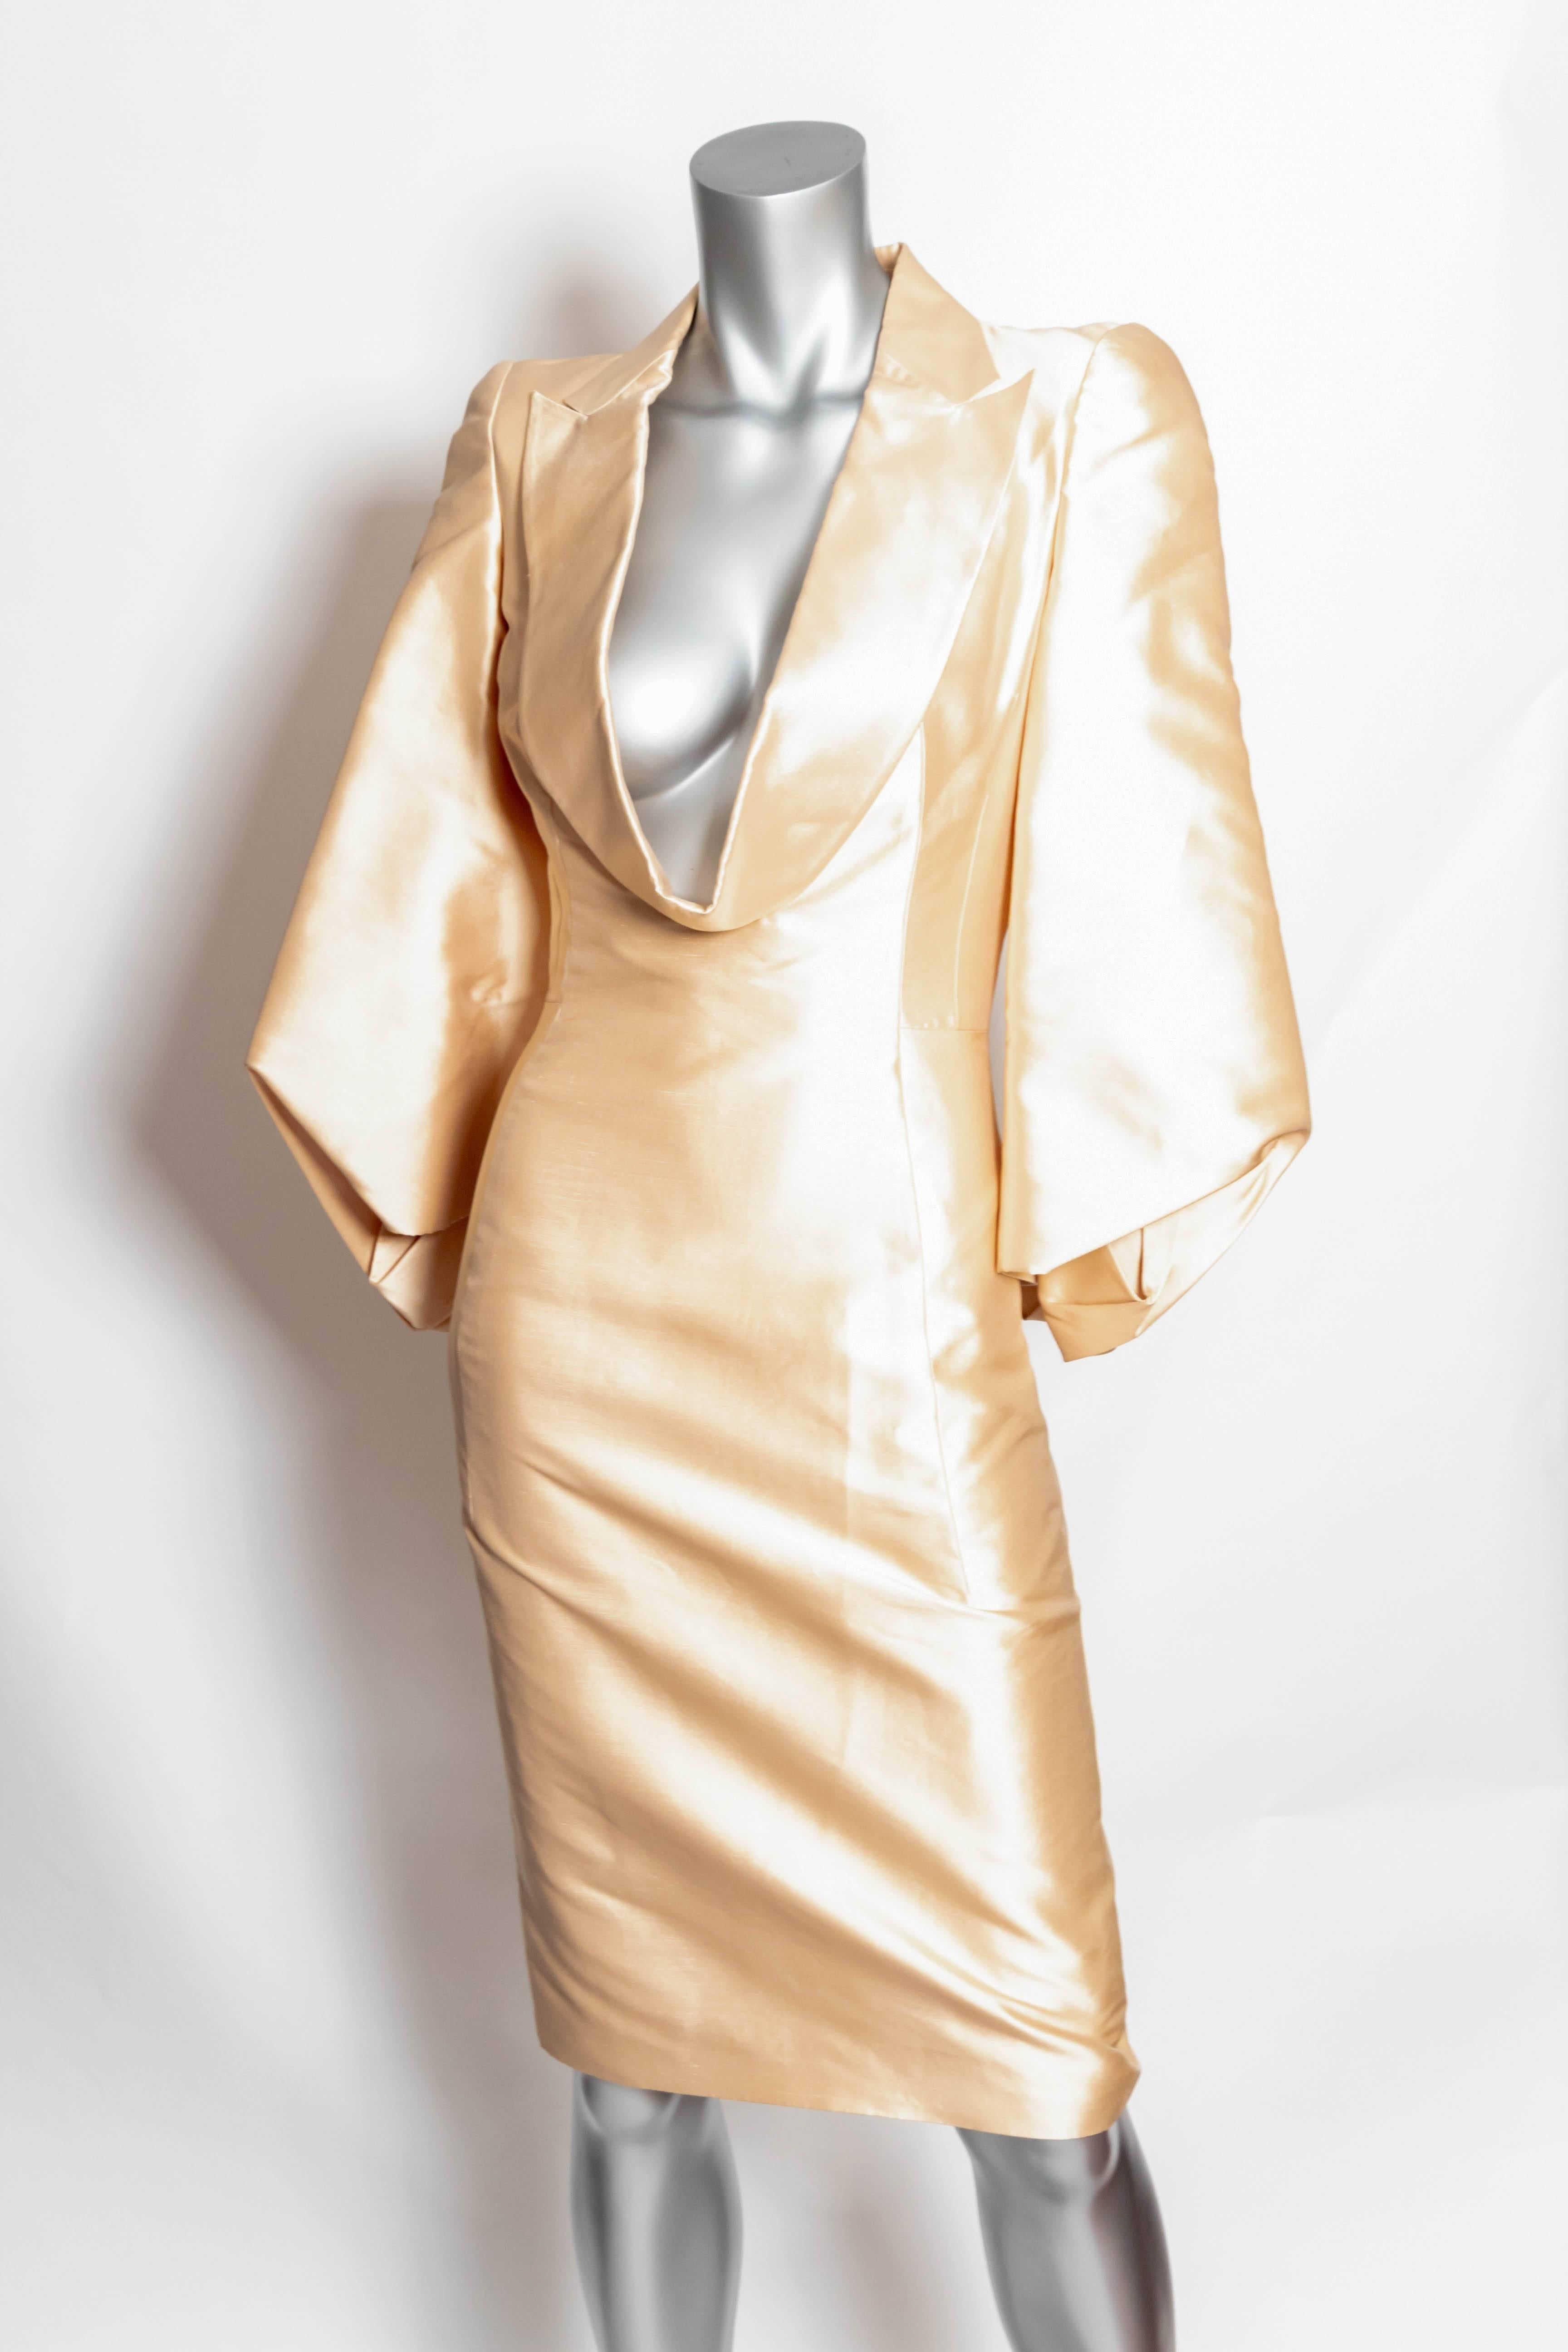 John Galliano Vintage Dress  2